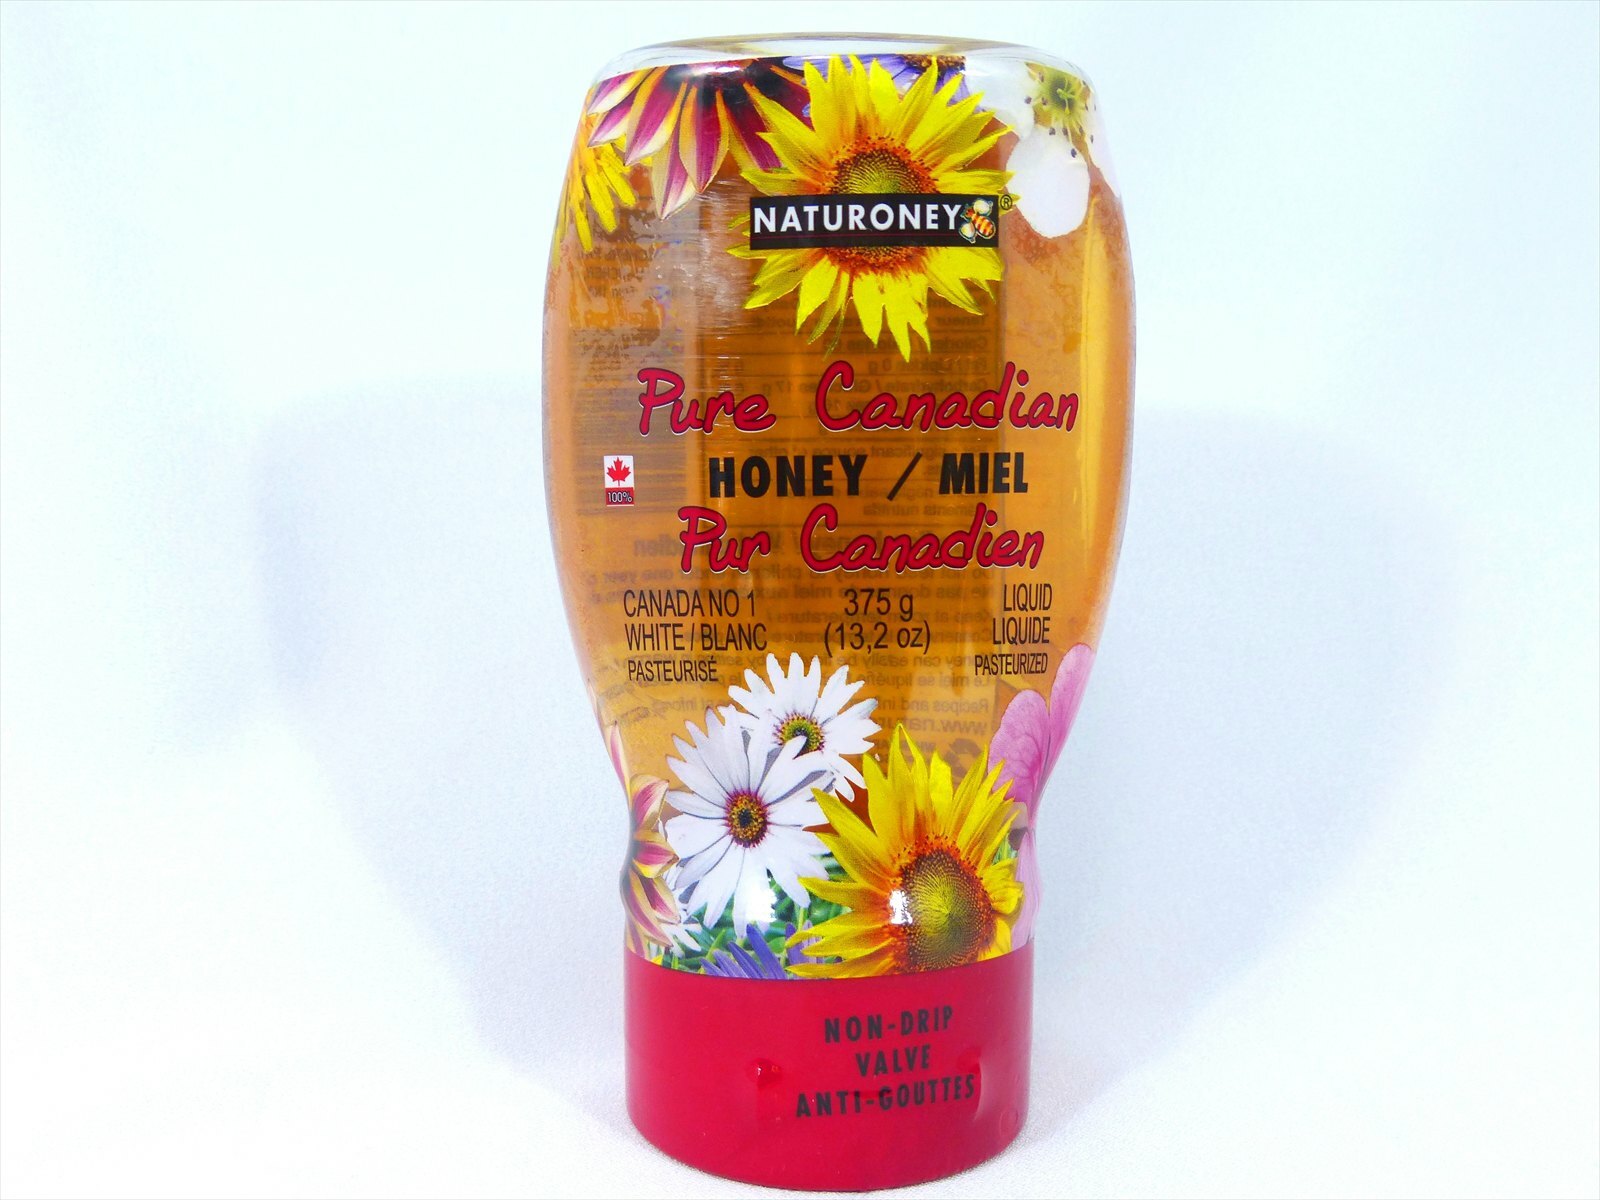 Naturoney Honey Pure Canadian